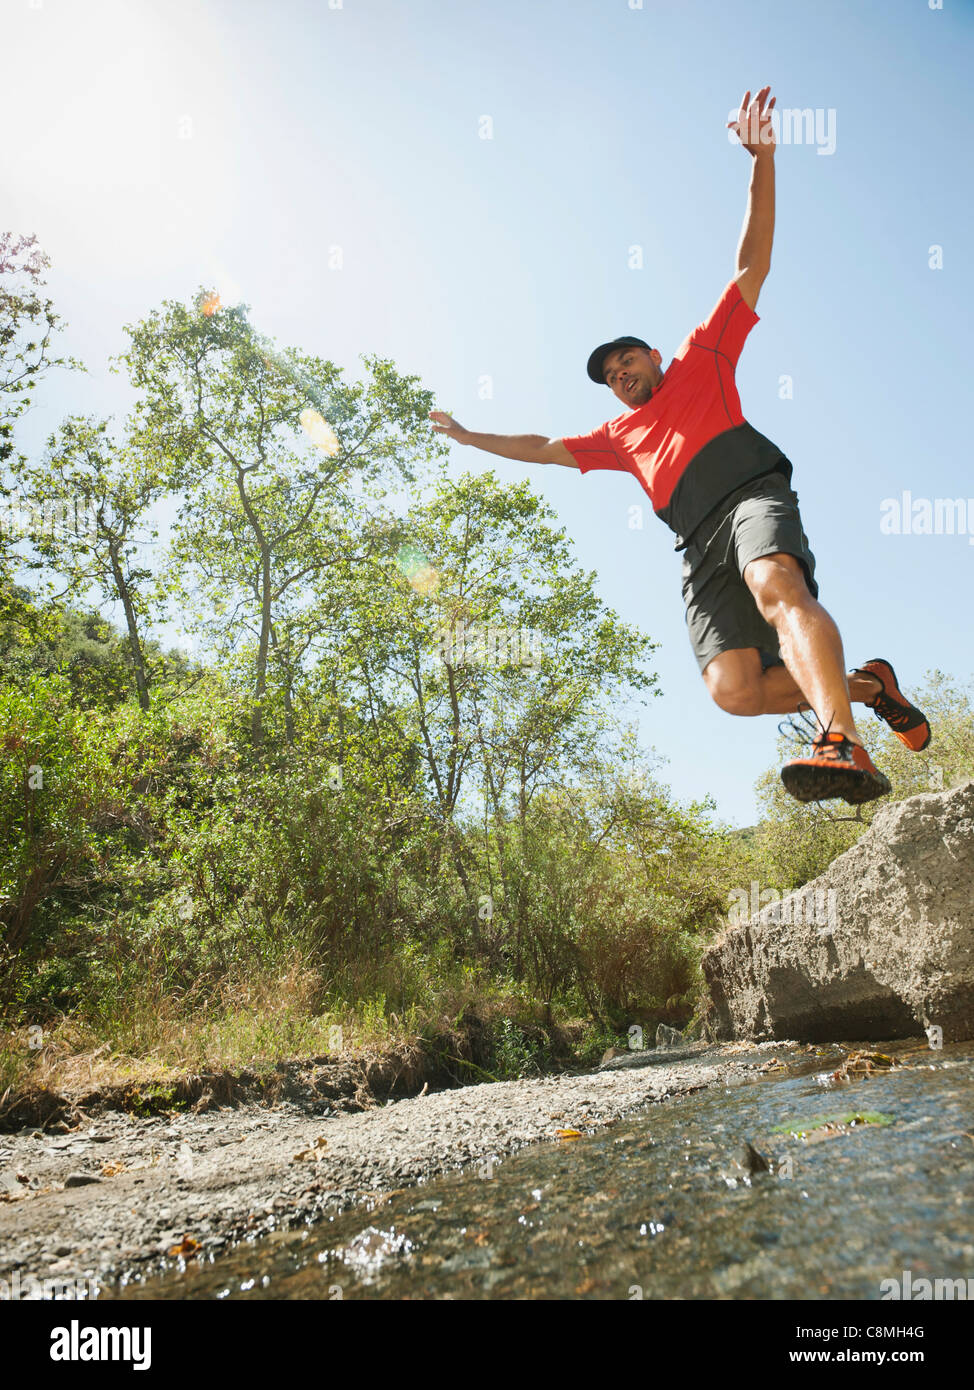 Mixed race man jumping into stream Stock Photo